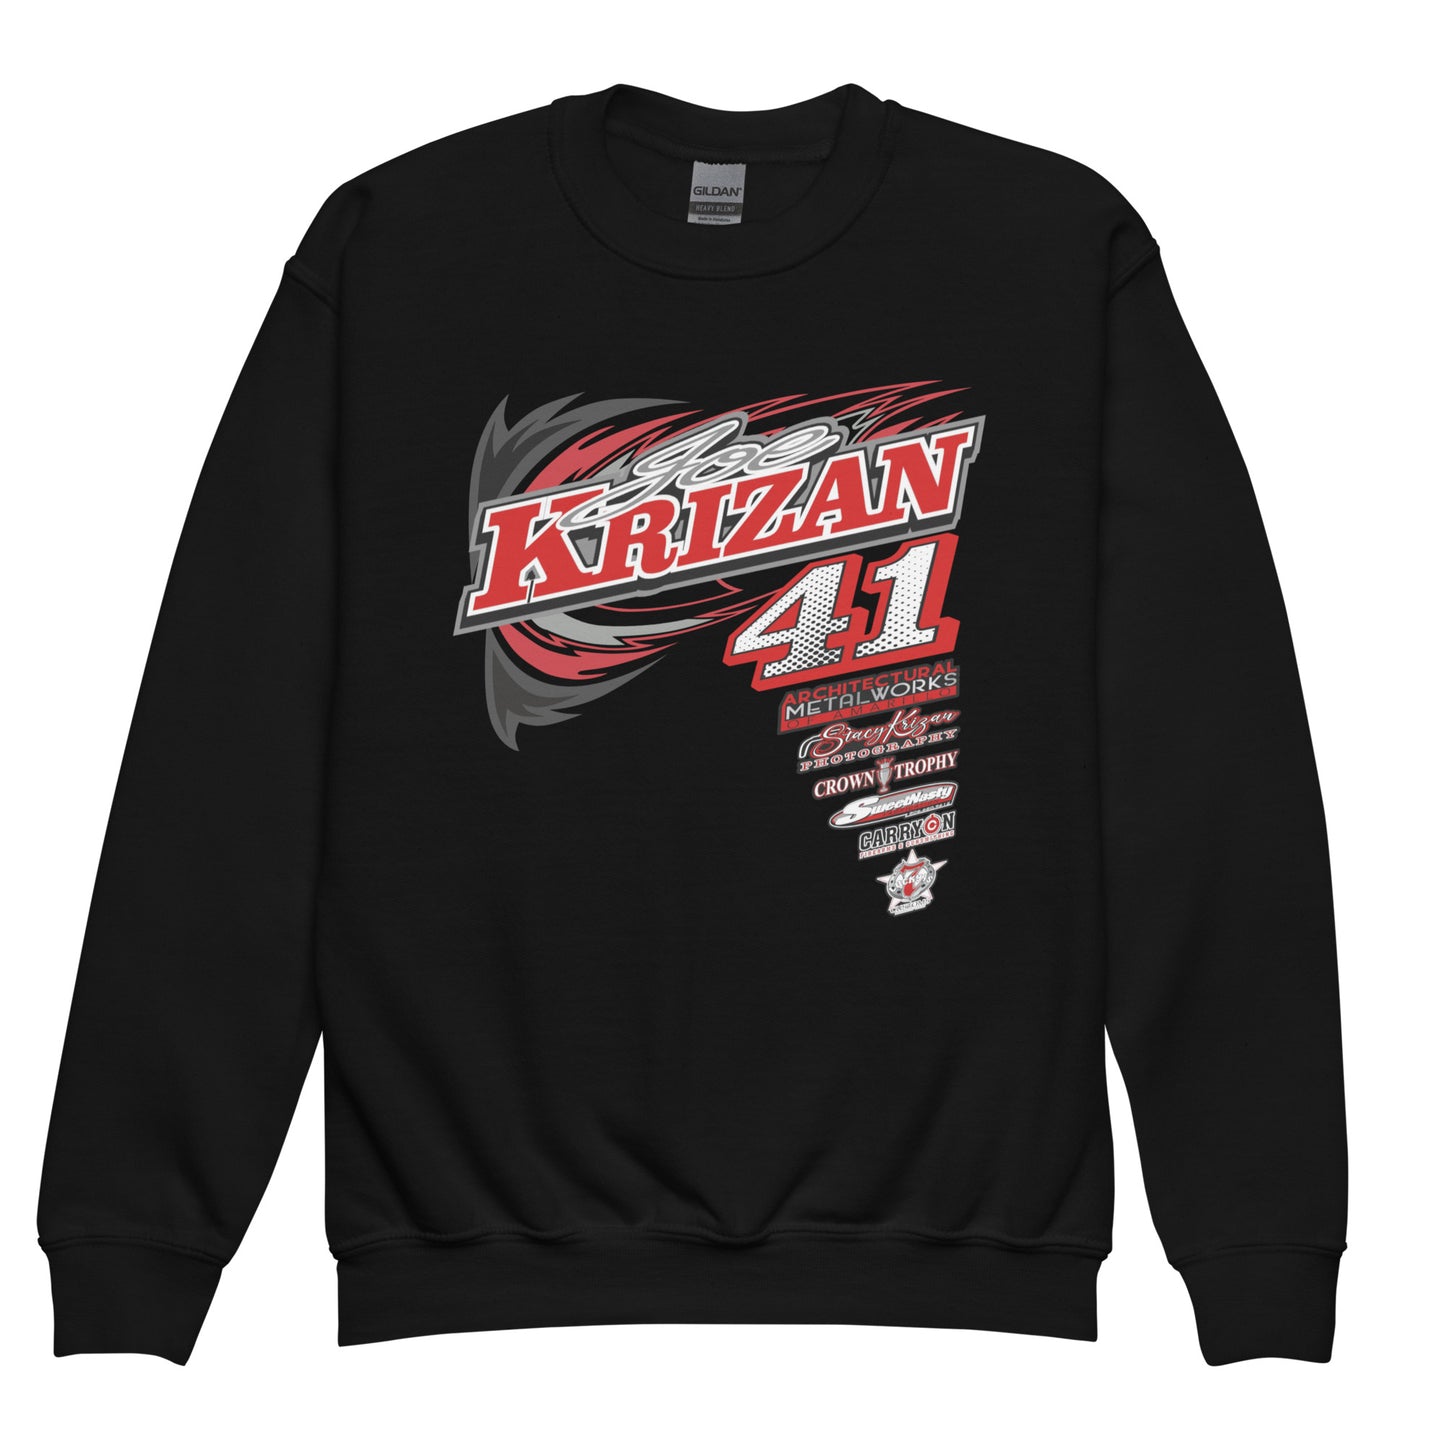 Joe Krizan Kids Crewneck Sweatshirt